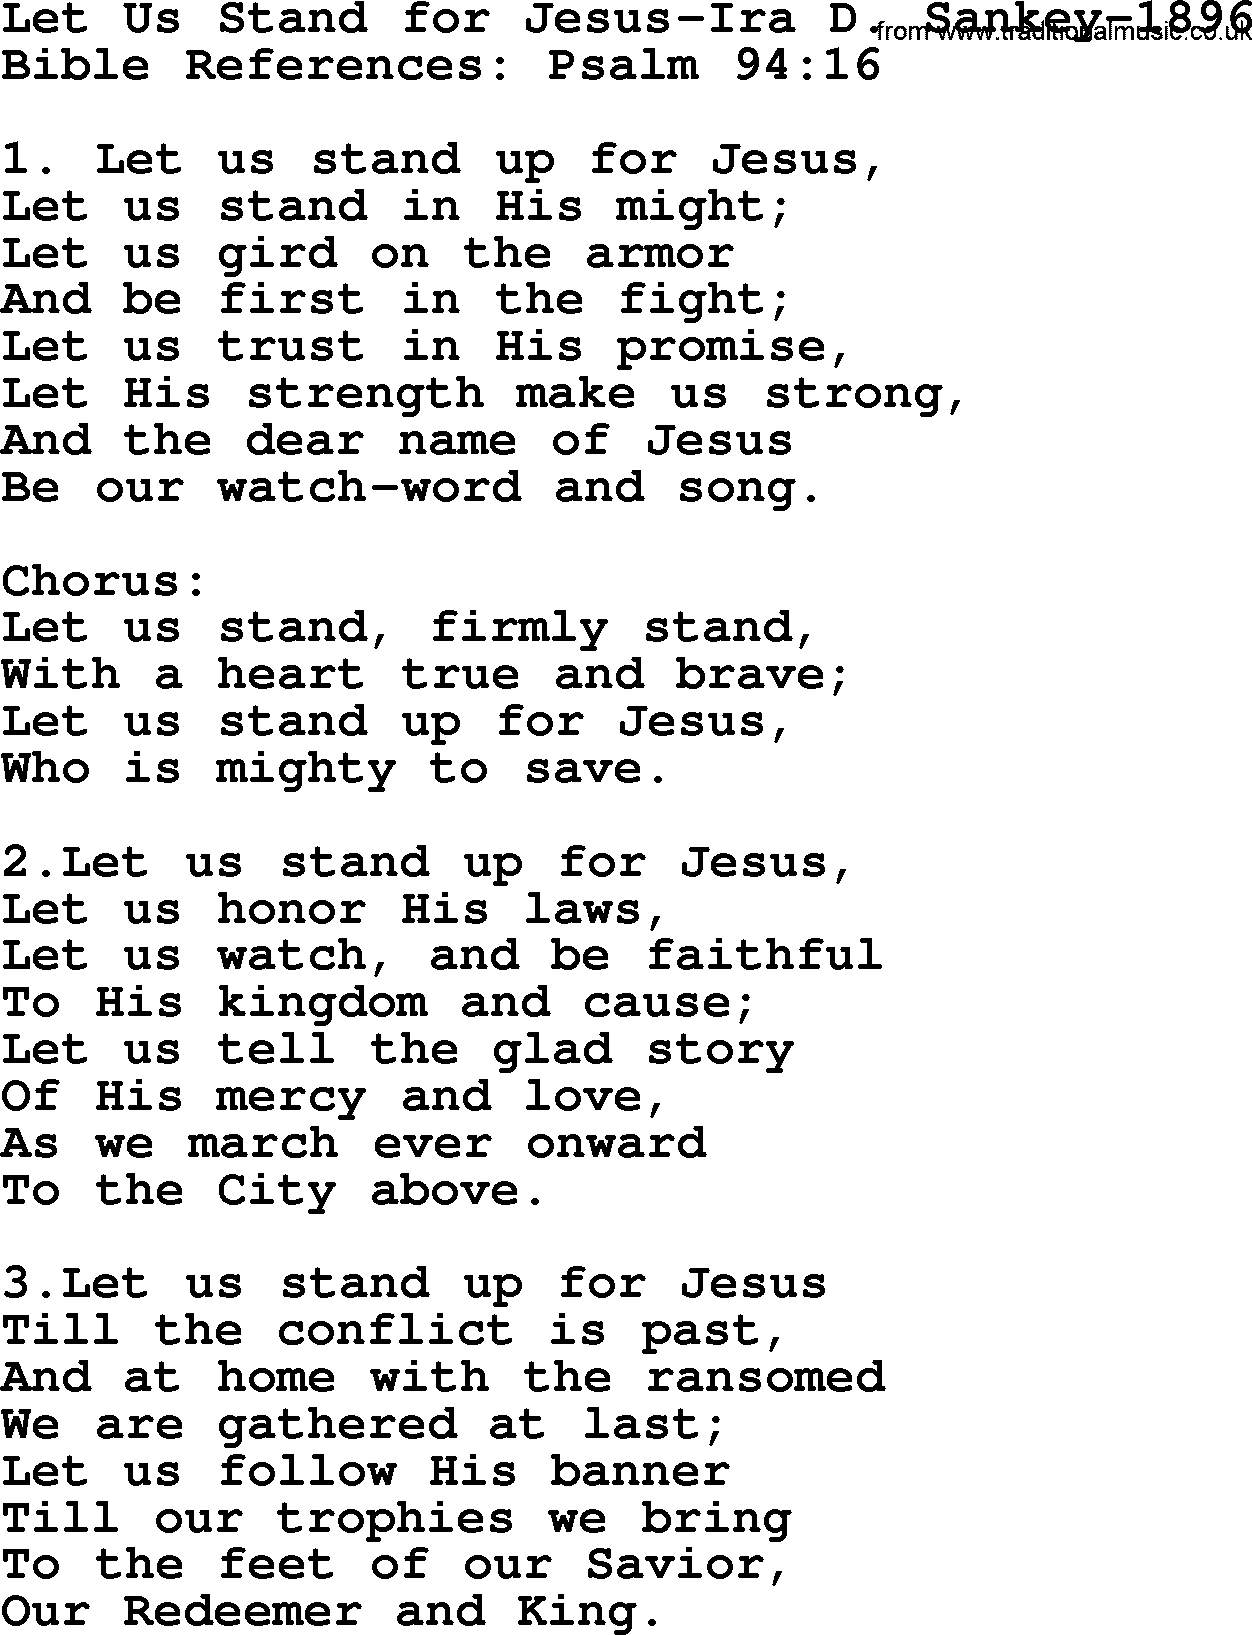 Ira Sankey hymn: Let Us Stand for Jesus-Ira Sankey, lyrics